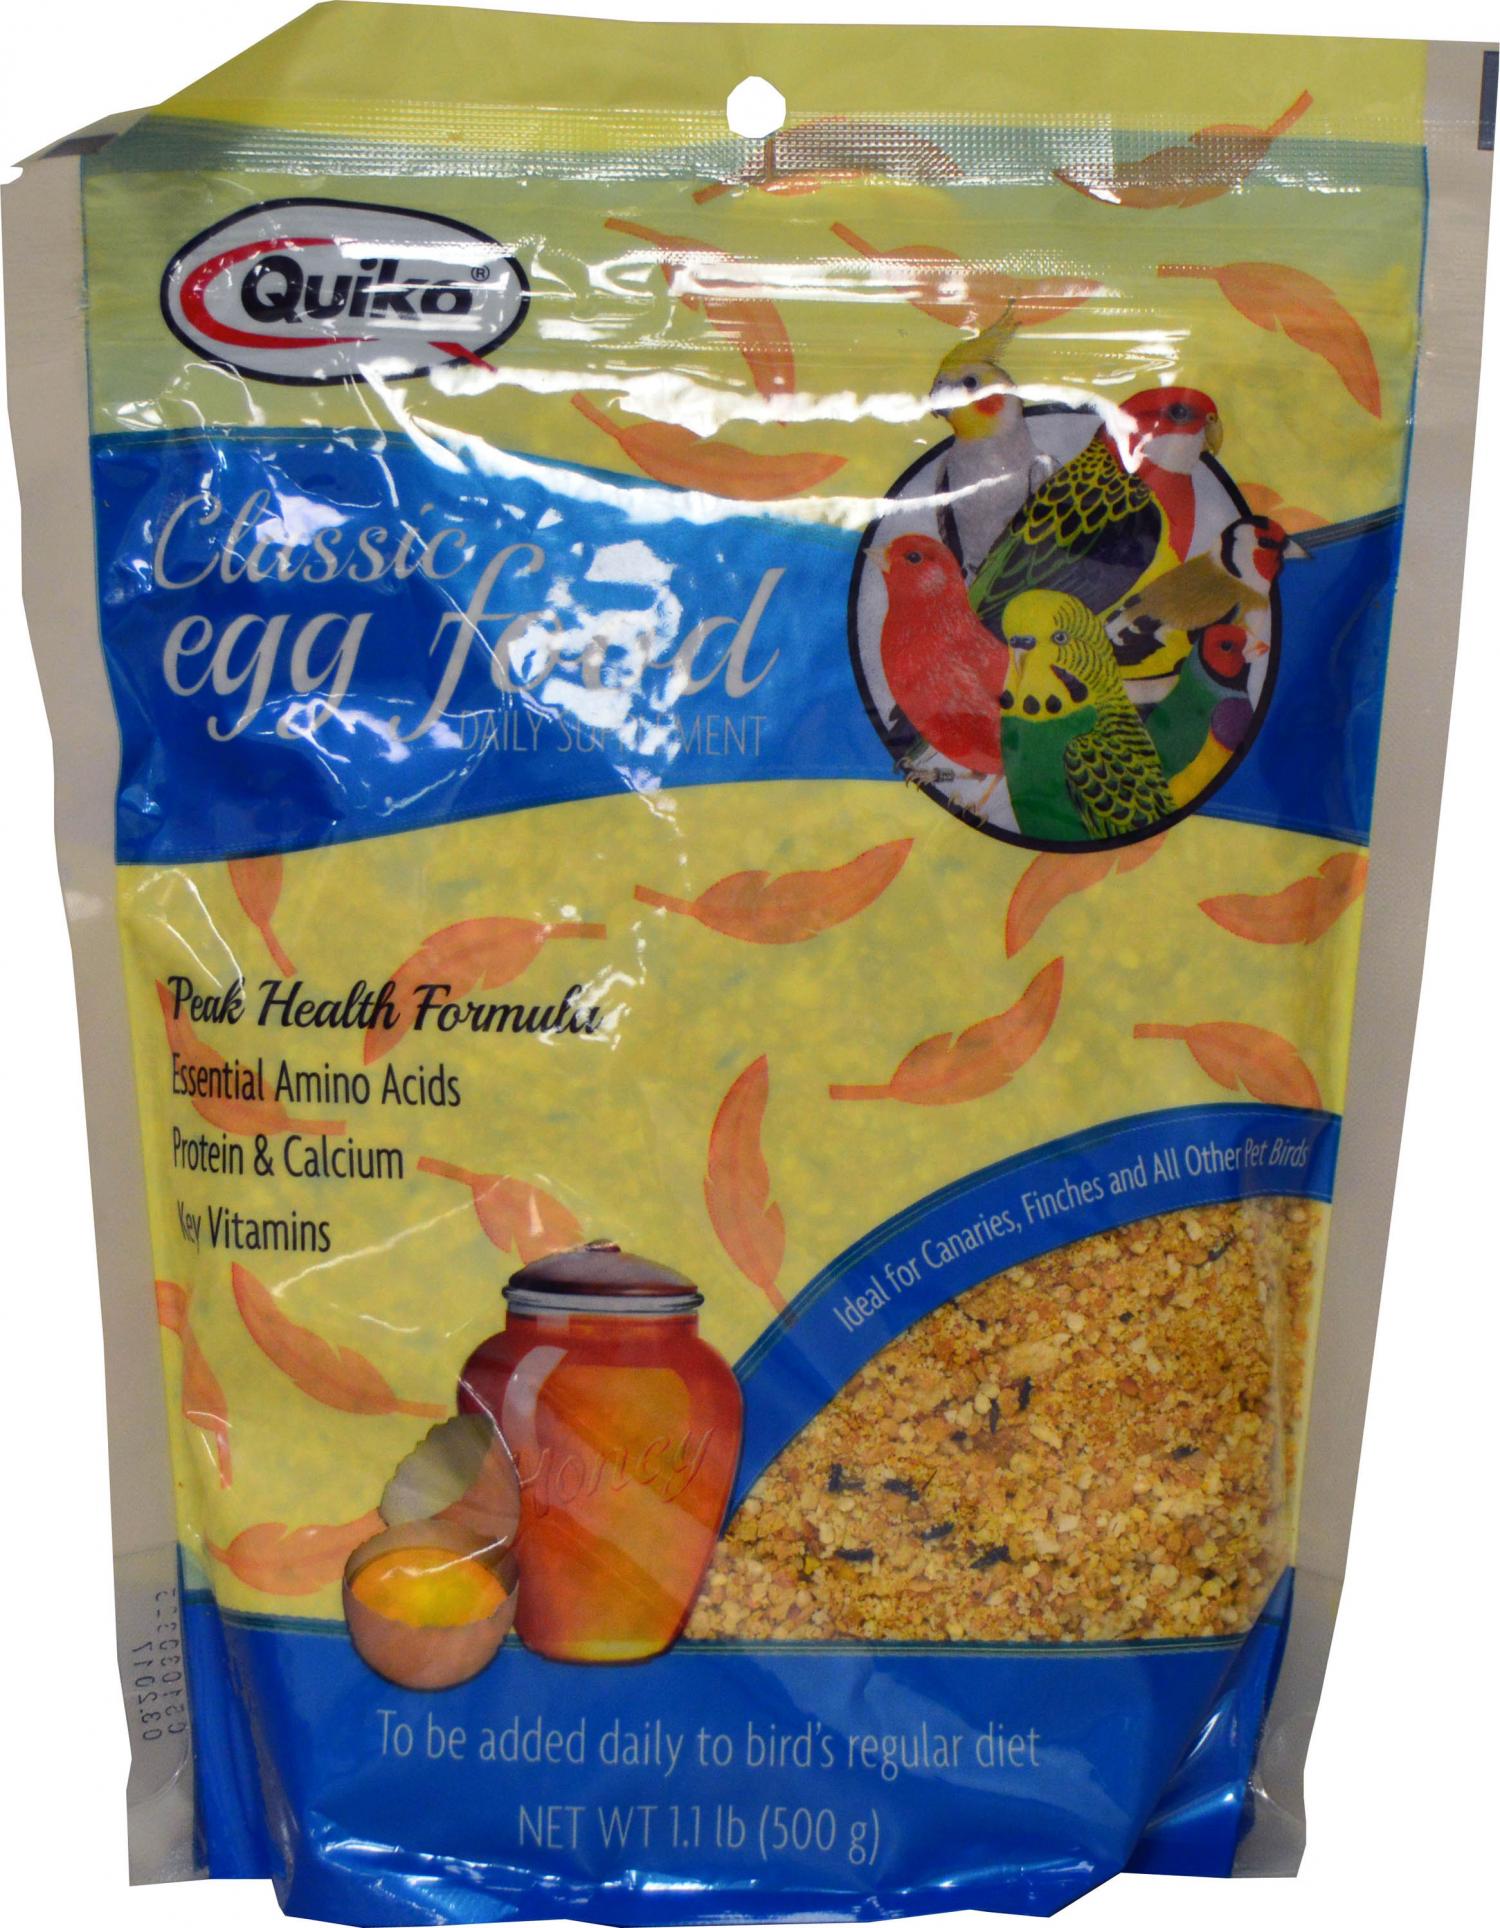 Quiko Classic Egg Food Supplement - All Birds